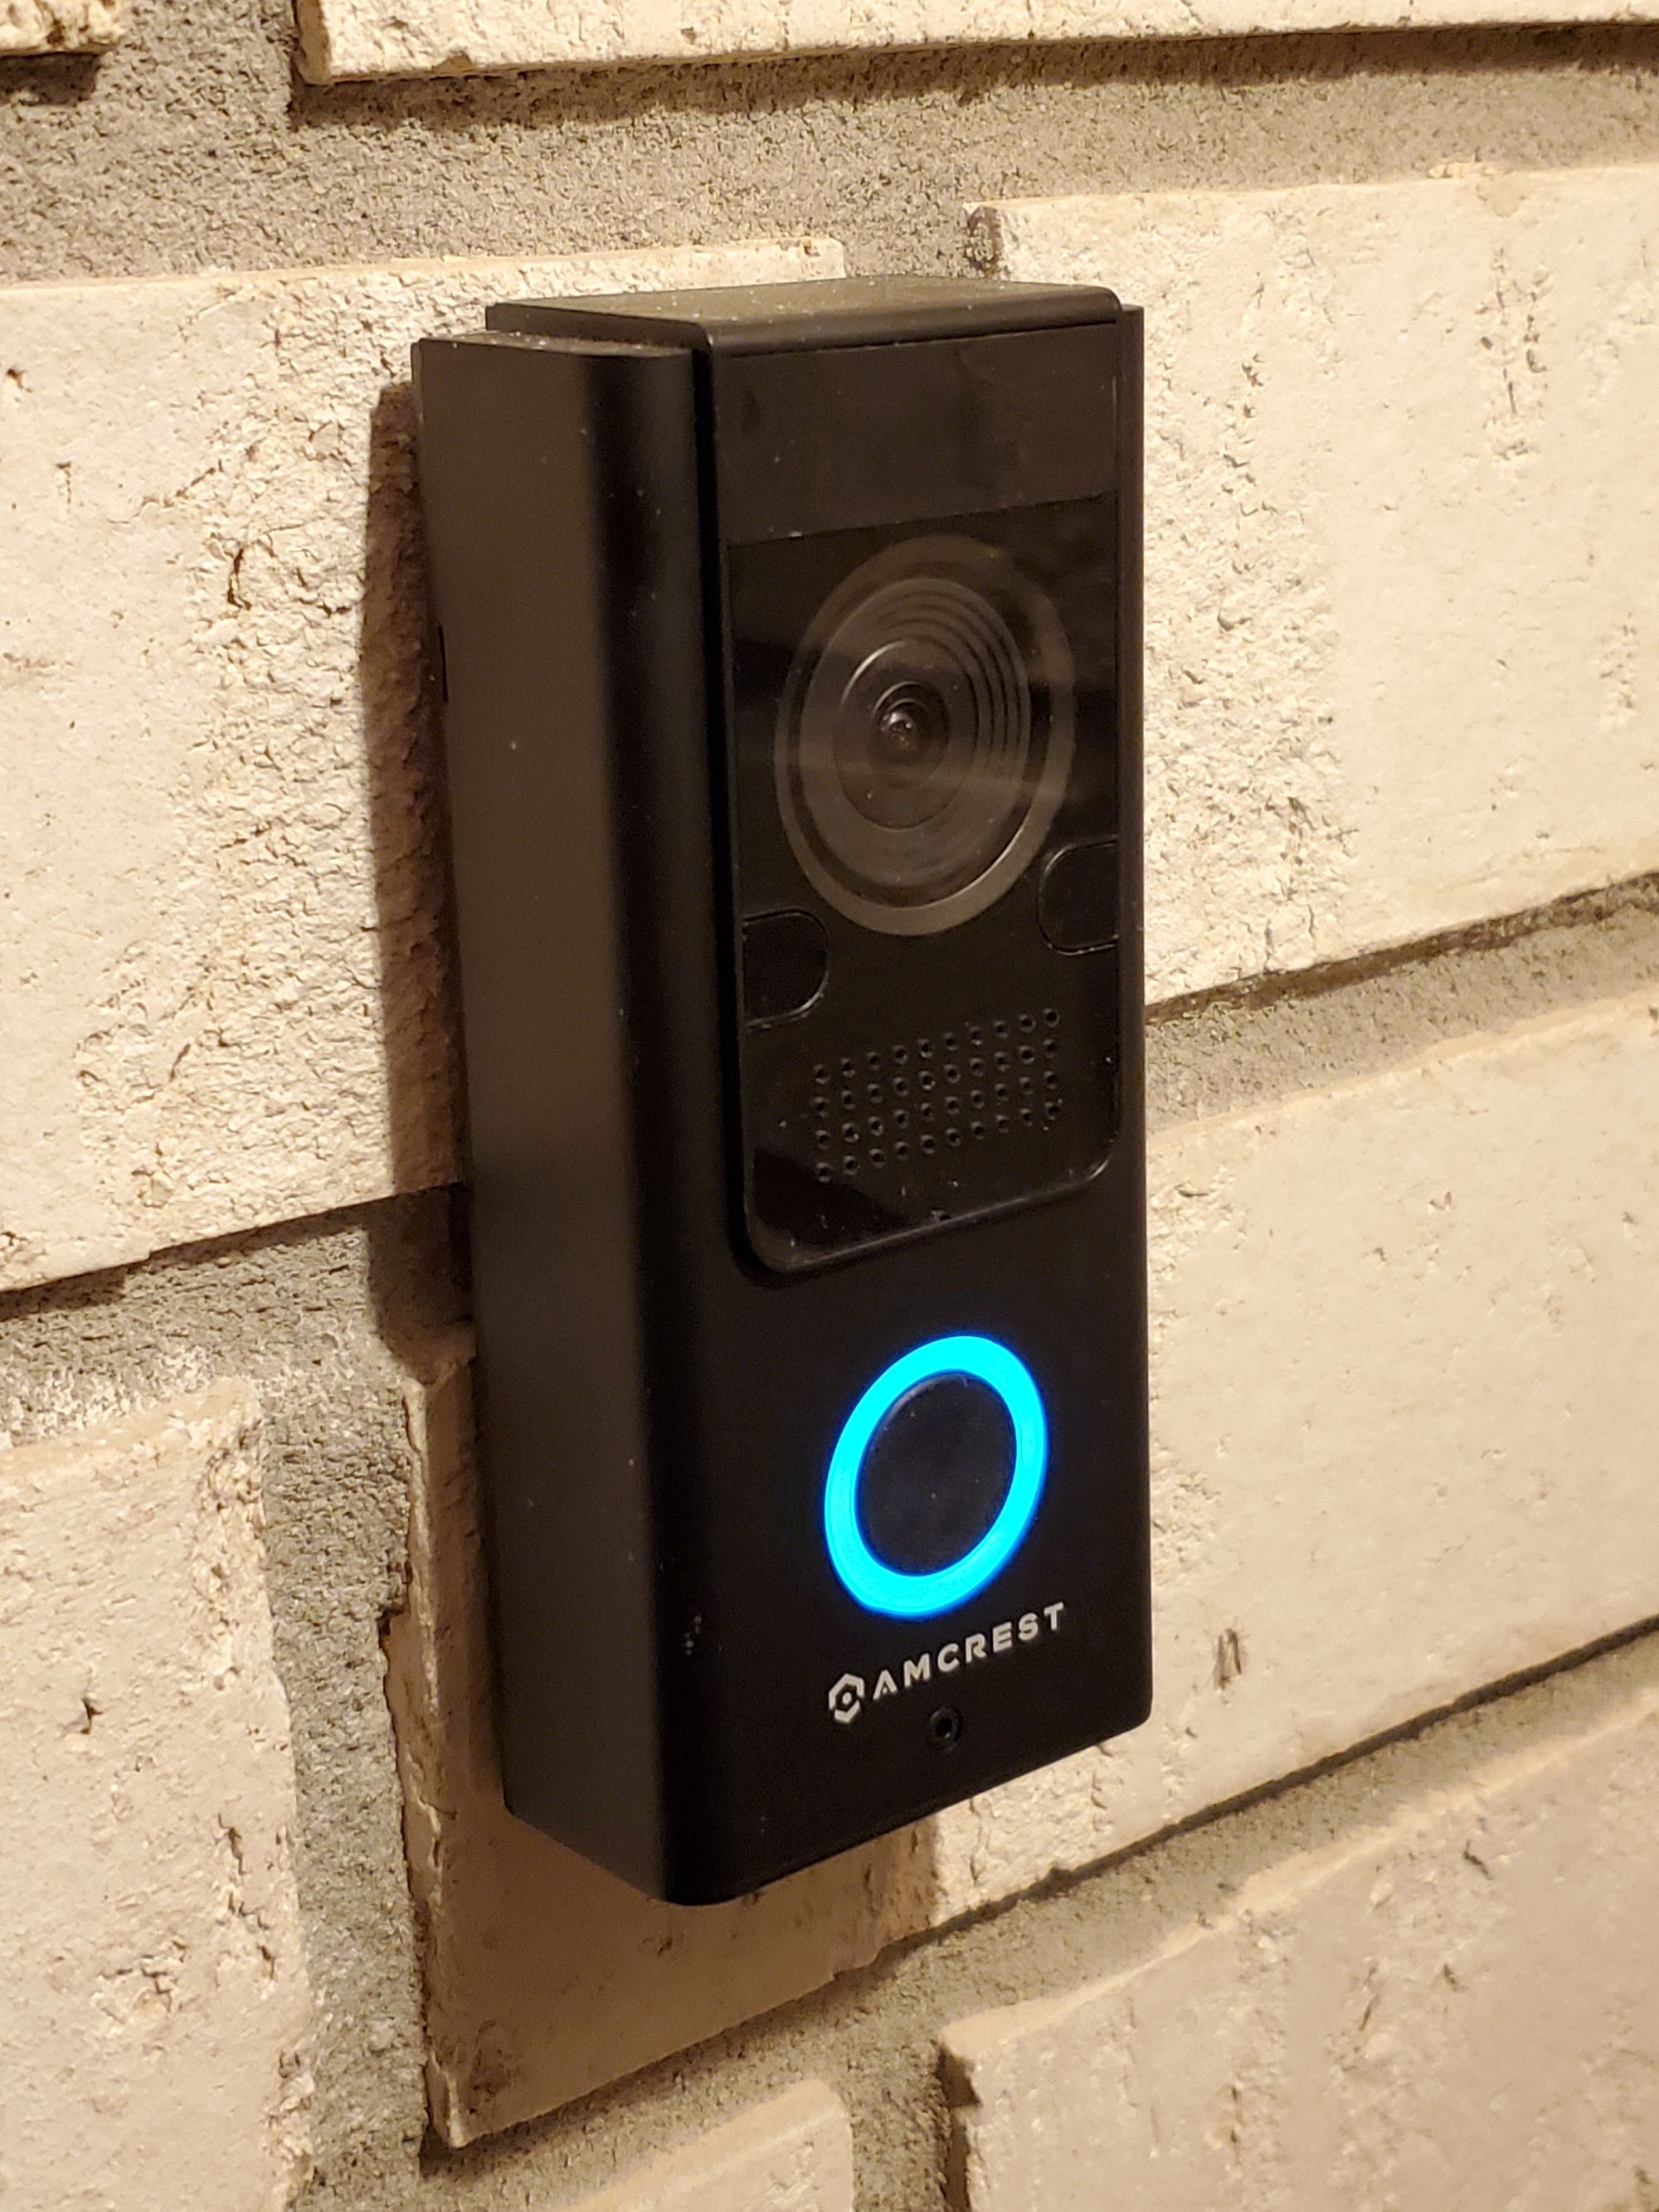 Fully Offline Video Doorbell for Home Assistant